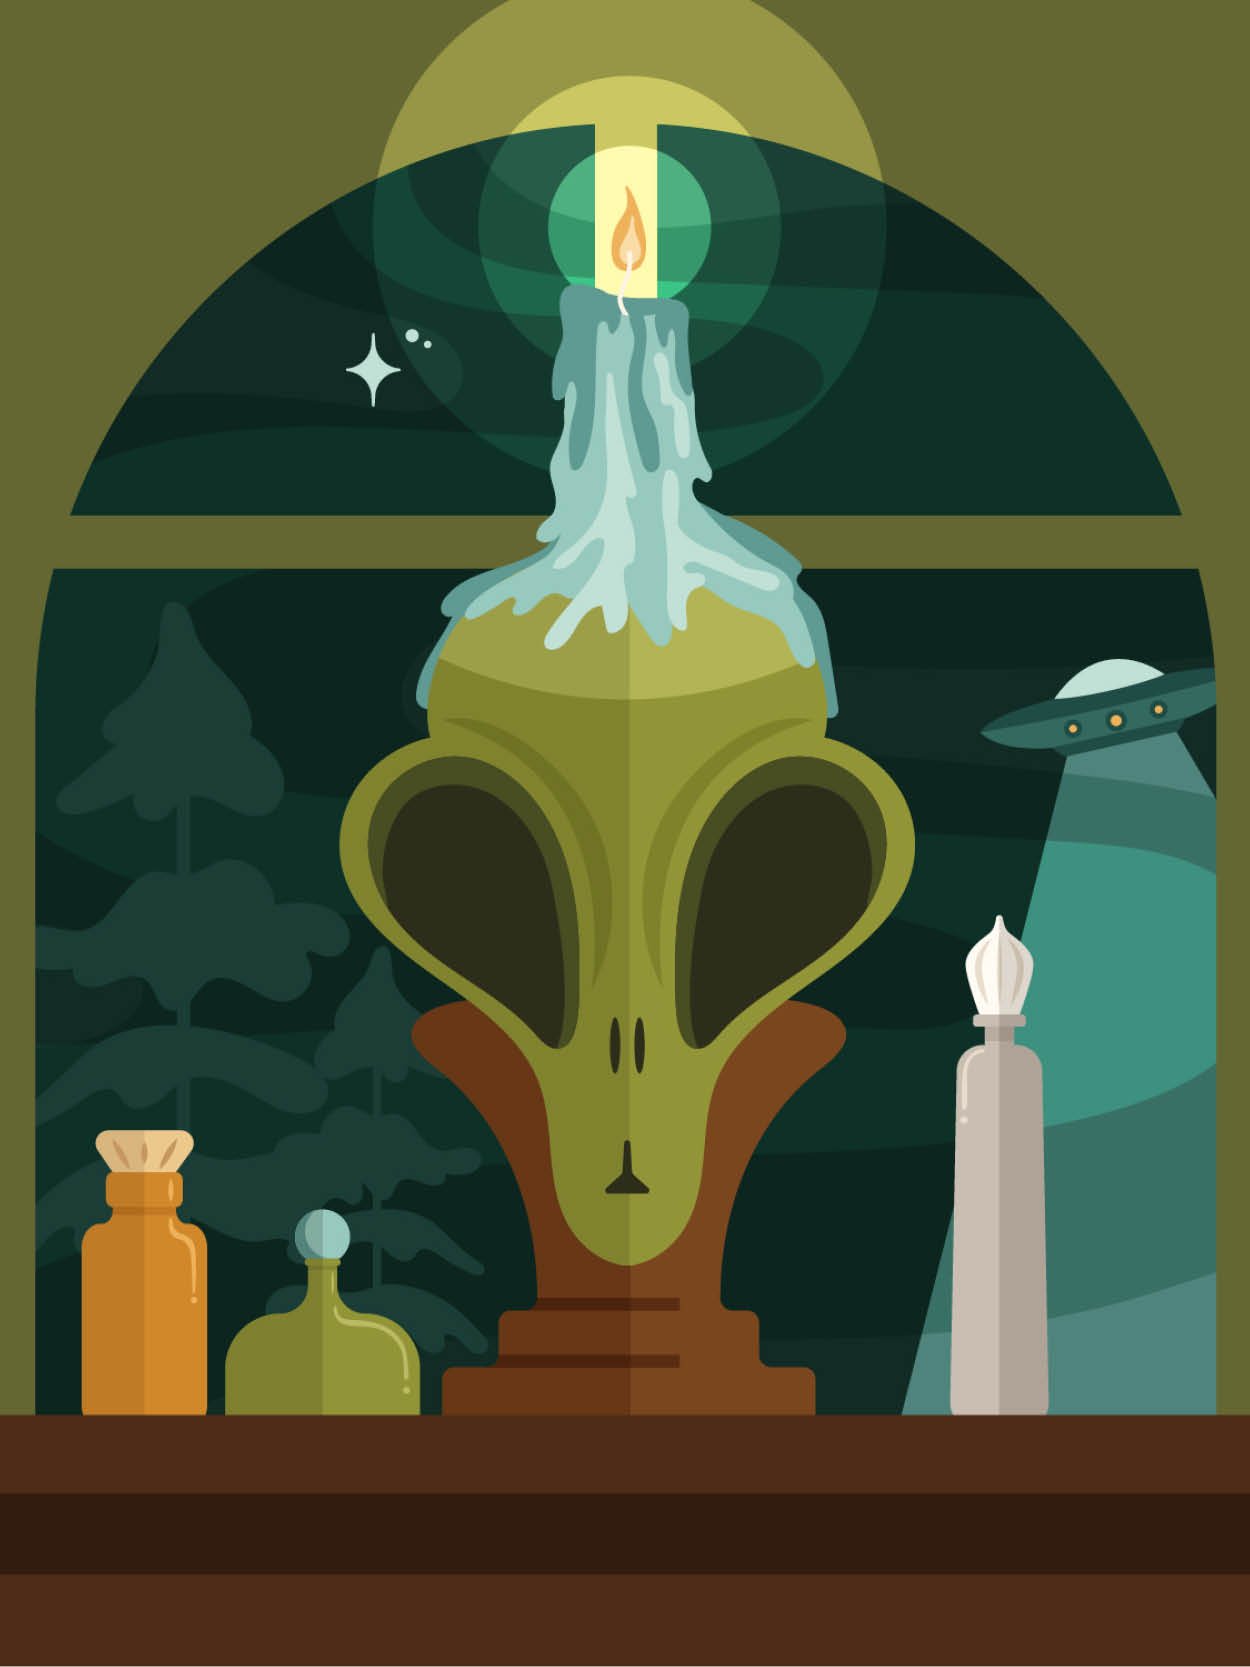 Alien-Candleholder-Sci-Fi-Fantasy-Illustration-by-Amanda-Weedmark.jpg